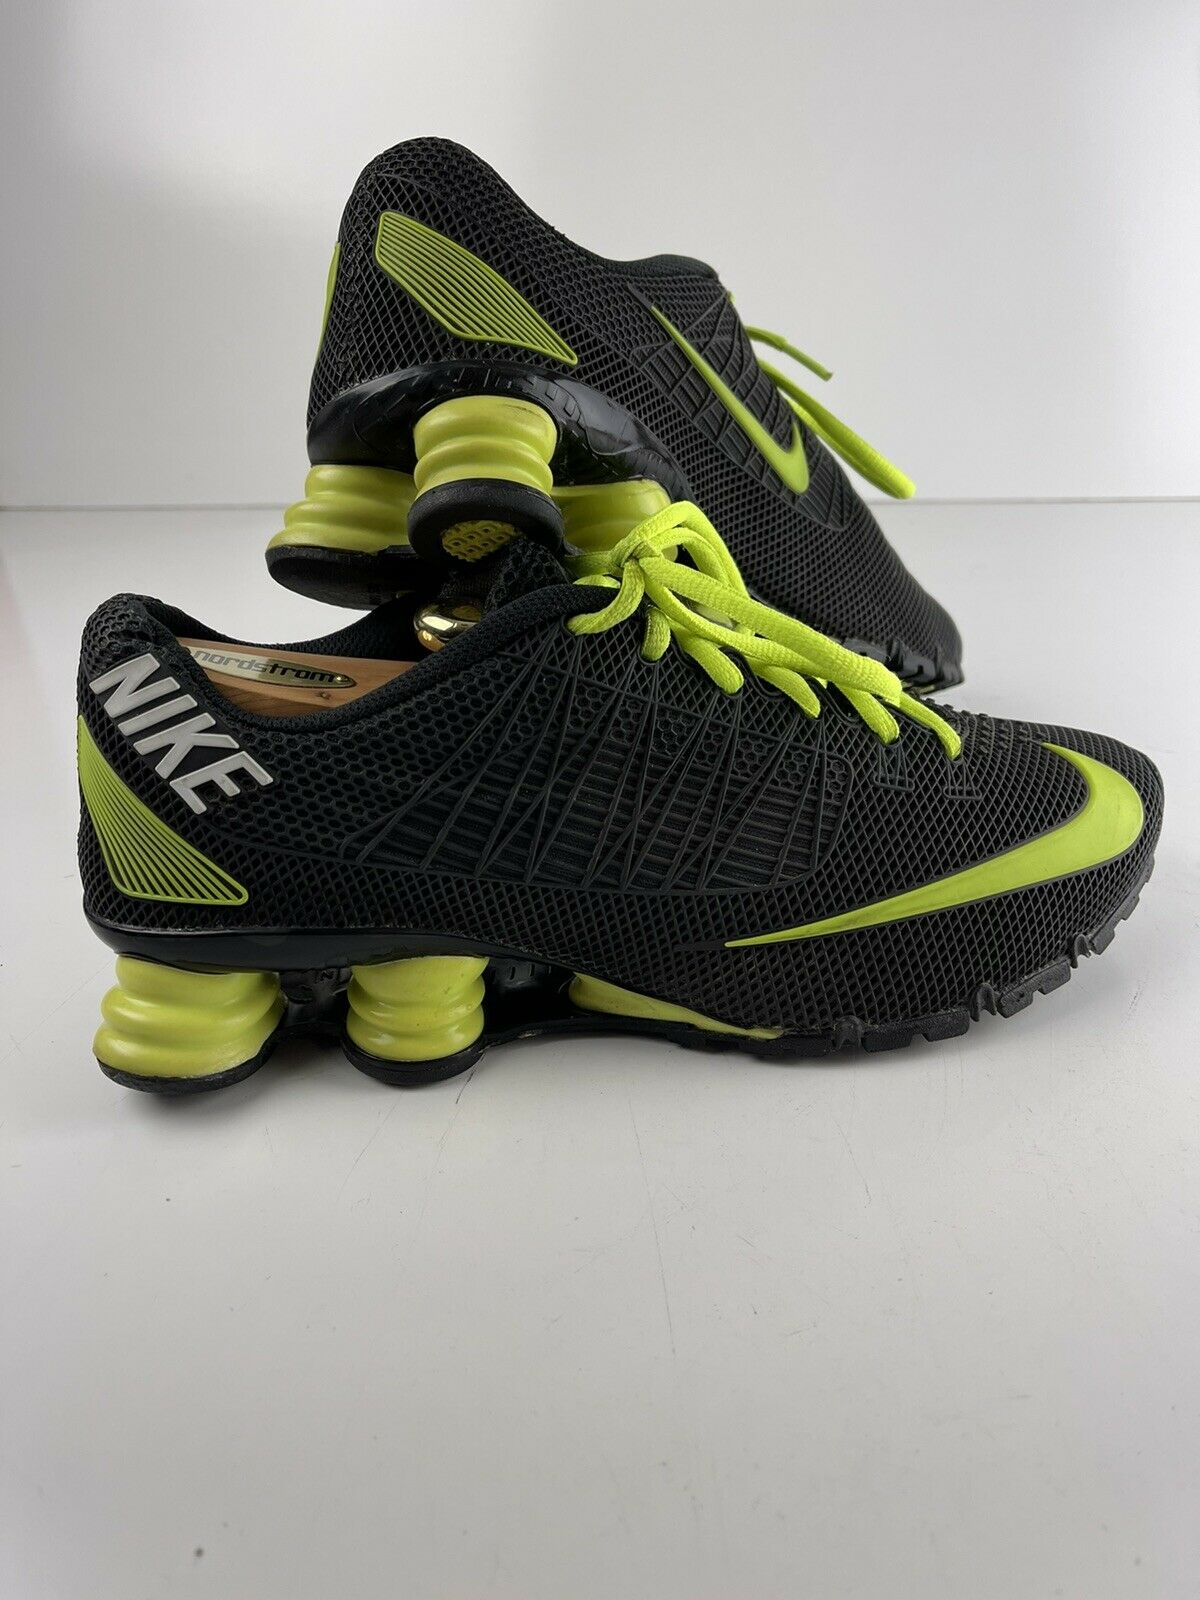 Nike Shox Turbo 15 Mens Running Shoes Black/Neon Green 355686-010 Size 9.5